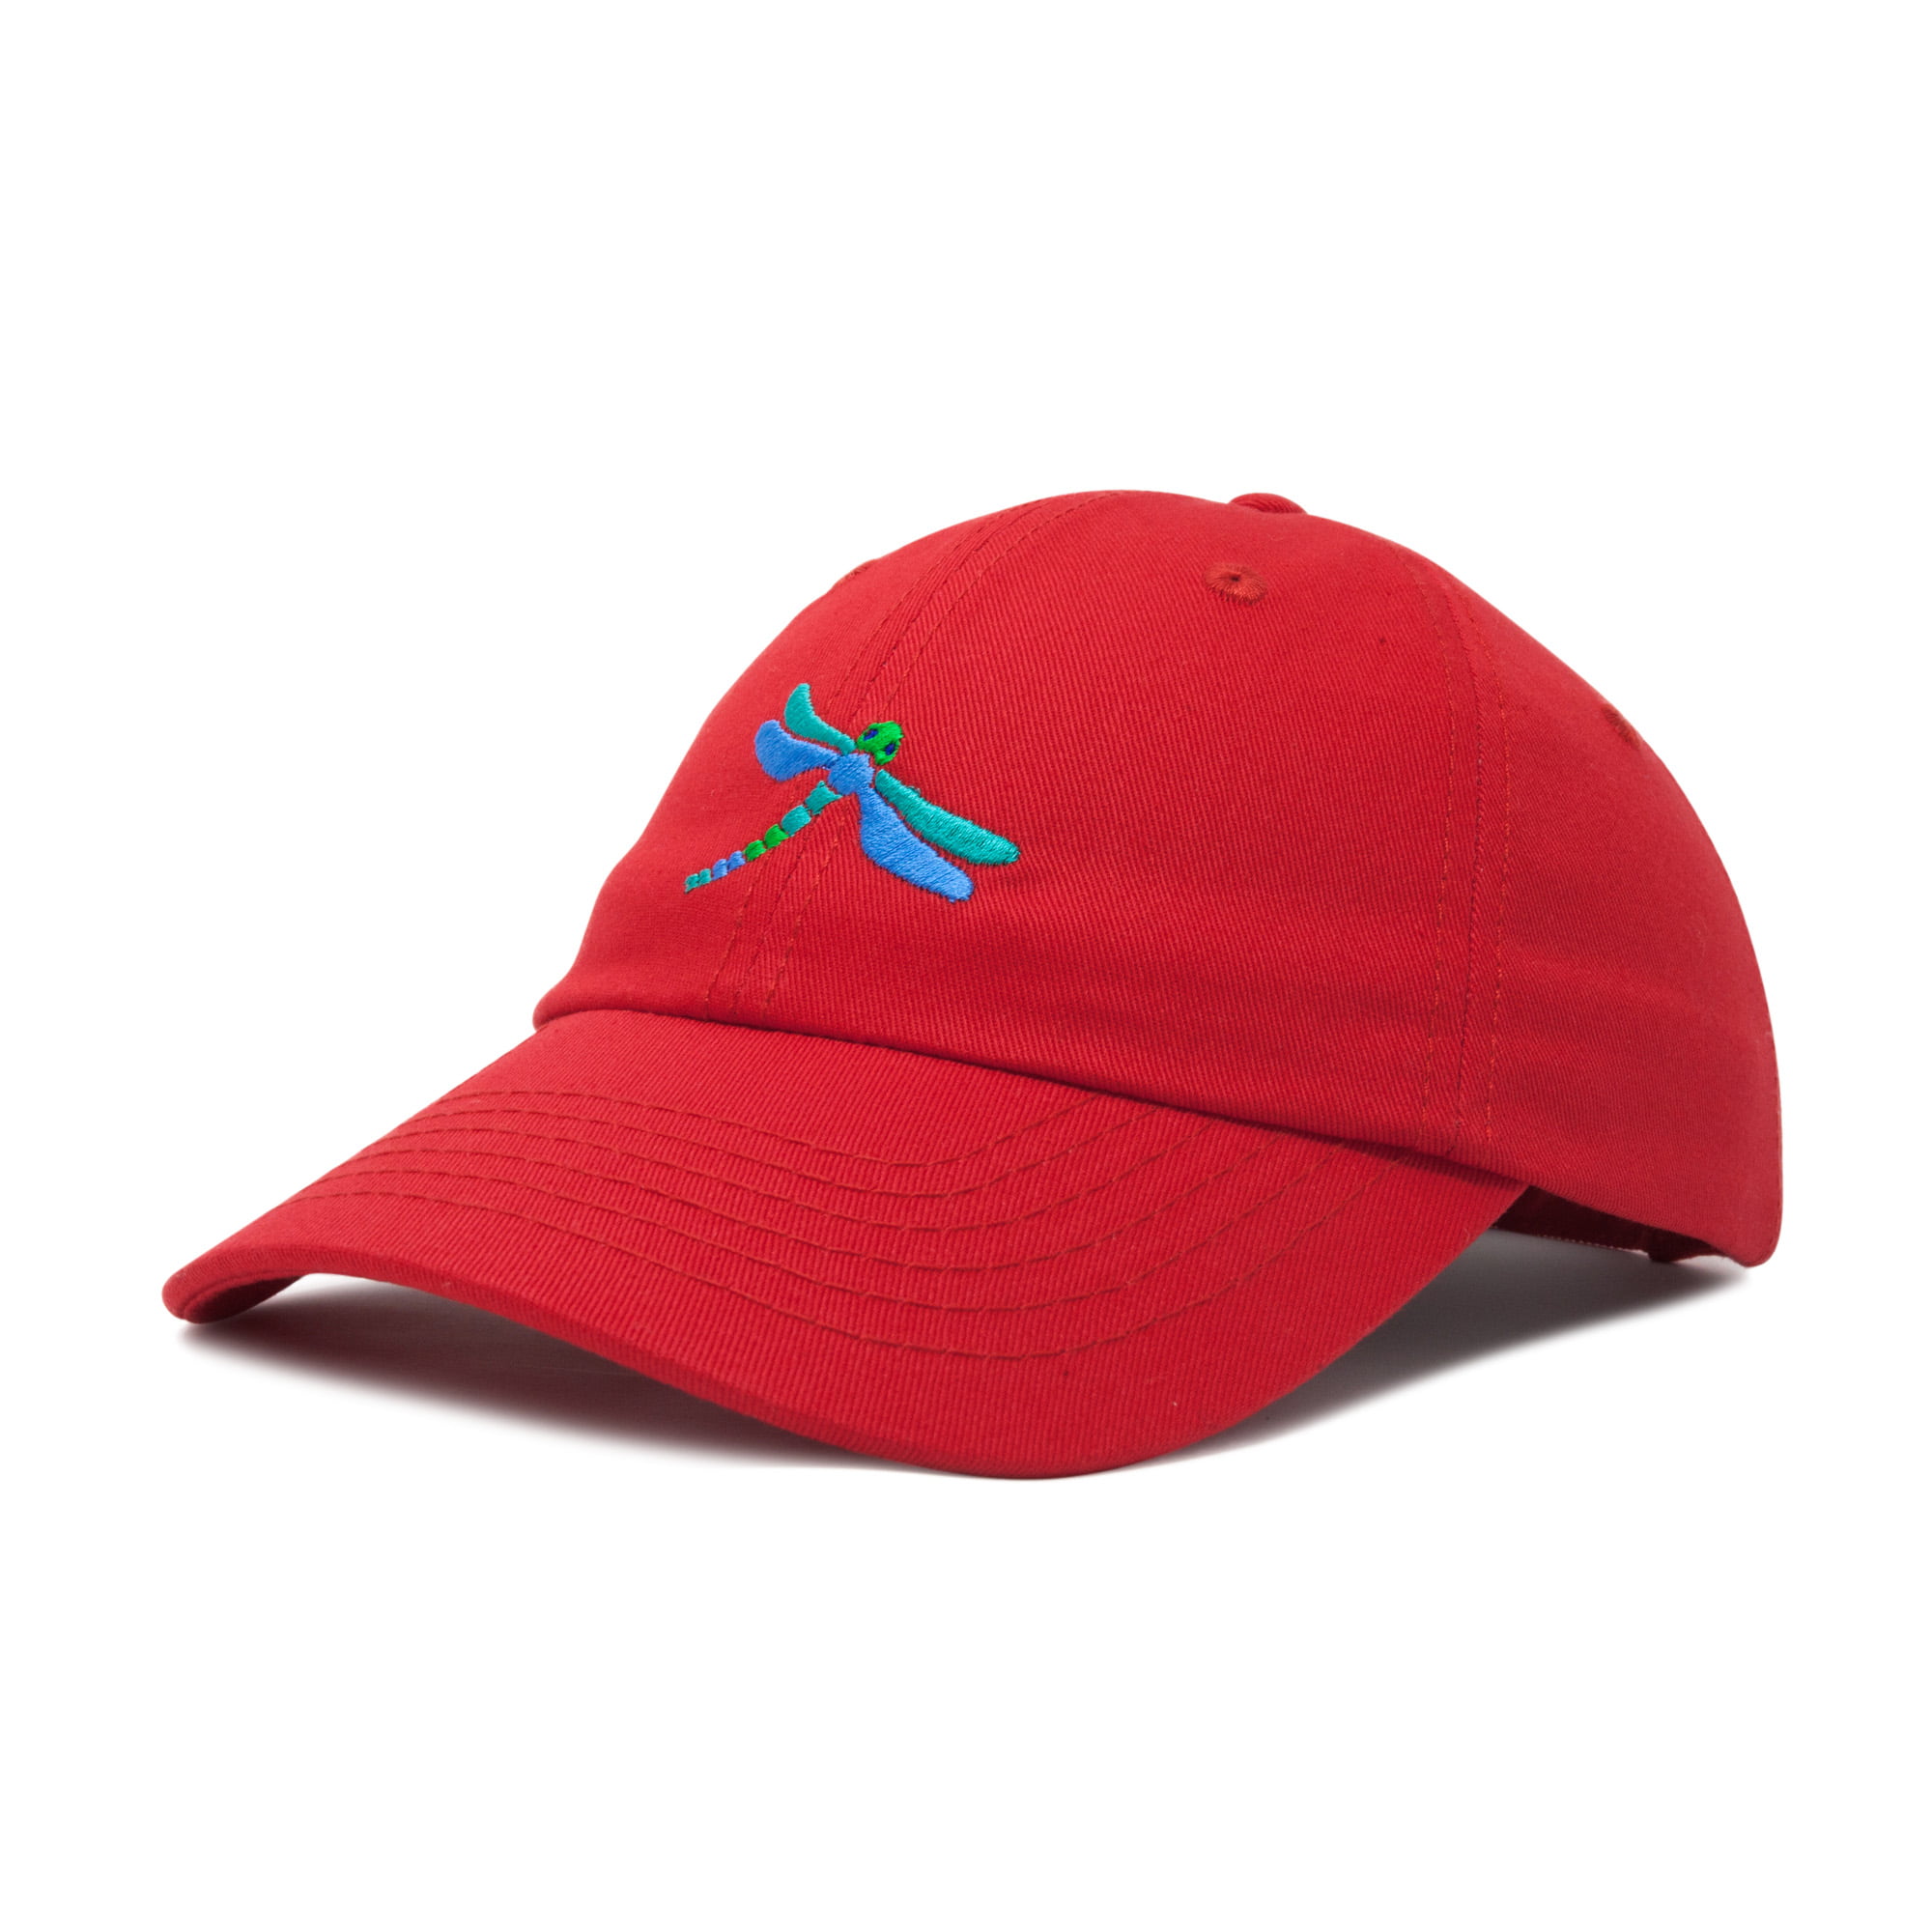 Art Design Dragonfly Lightweight Unisex Baseball Caps Adjustable Breathable Sun Hat for Sport Outdoor Black